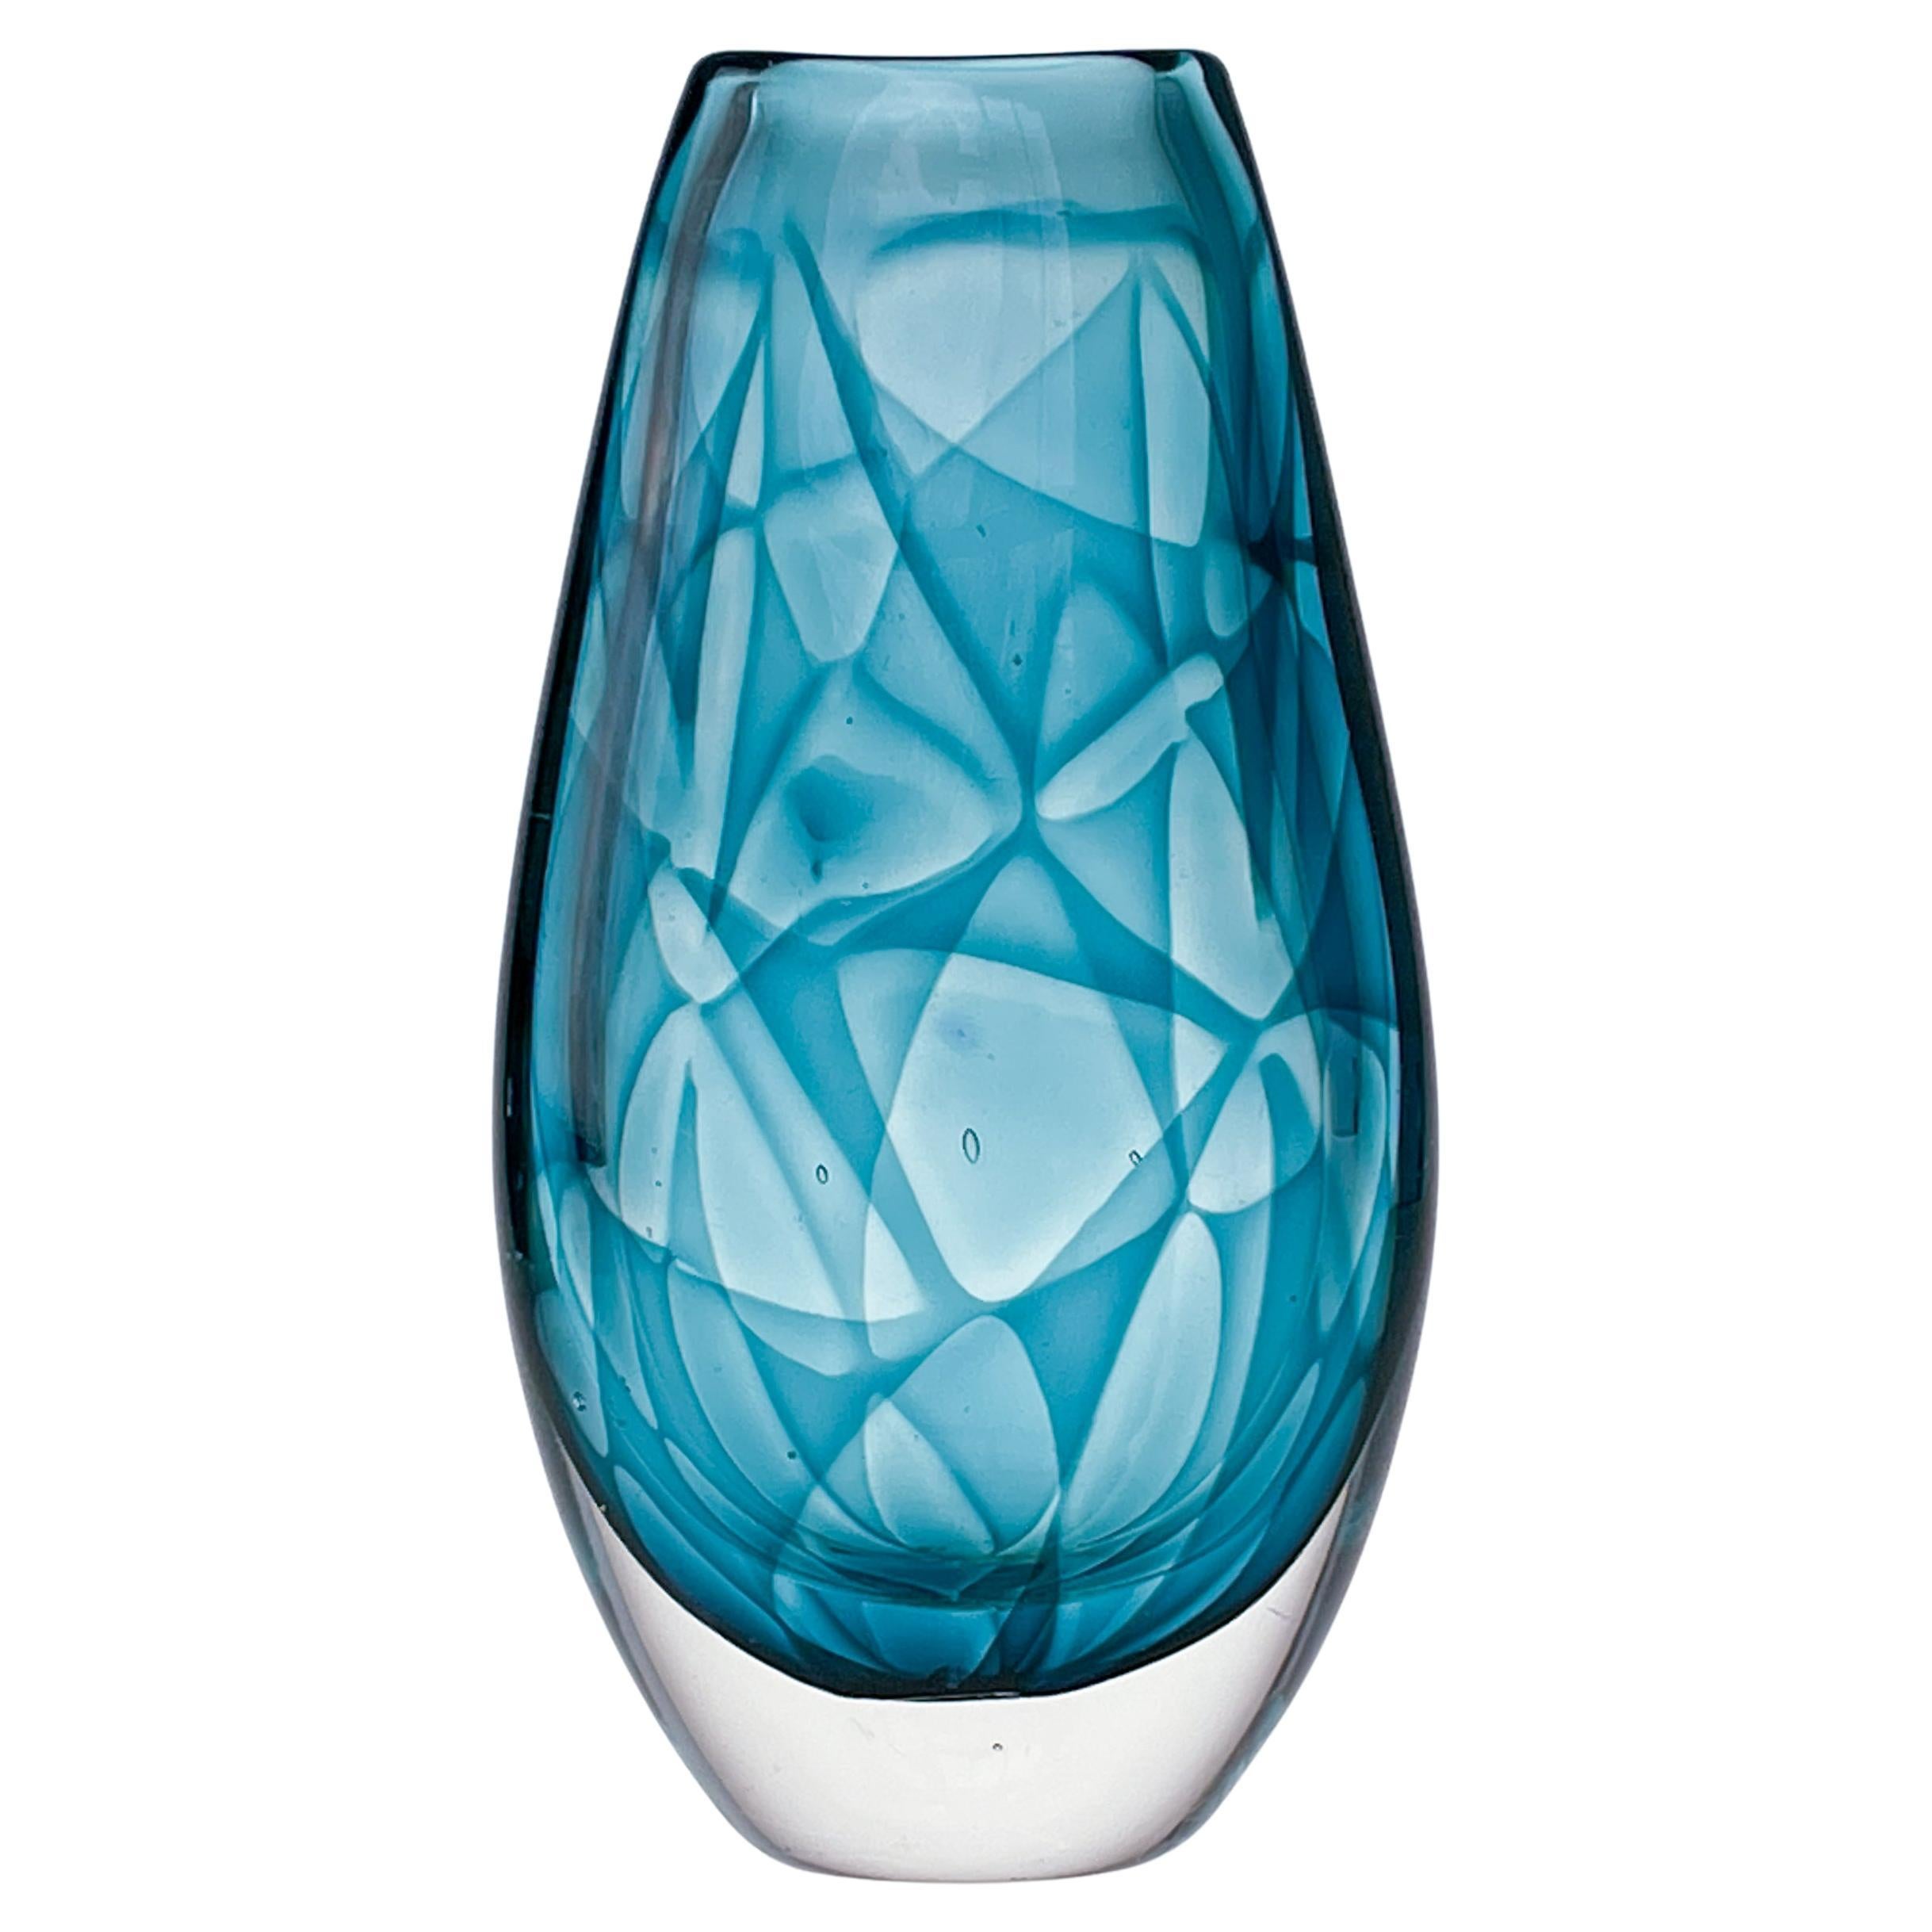 Skandinavische moderne Vicke Lindstrand-Glasvase, Farbe Kosta, Türkis, 1960er Jahre

Frei geblasenes Kristallkunstobjekt / Vase 